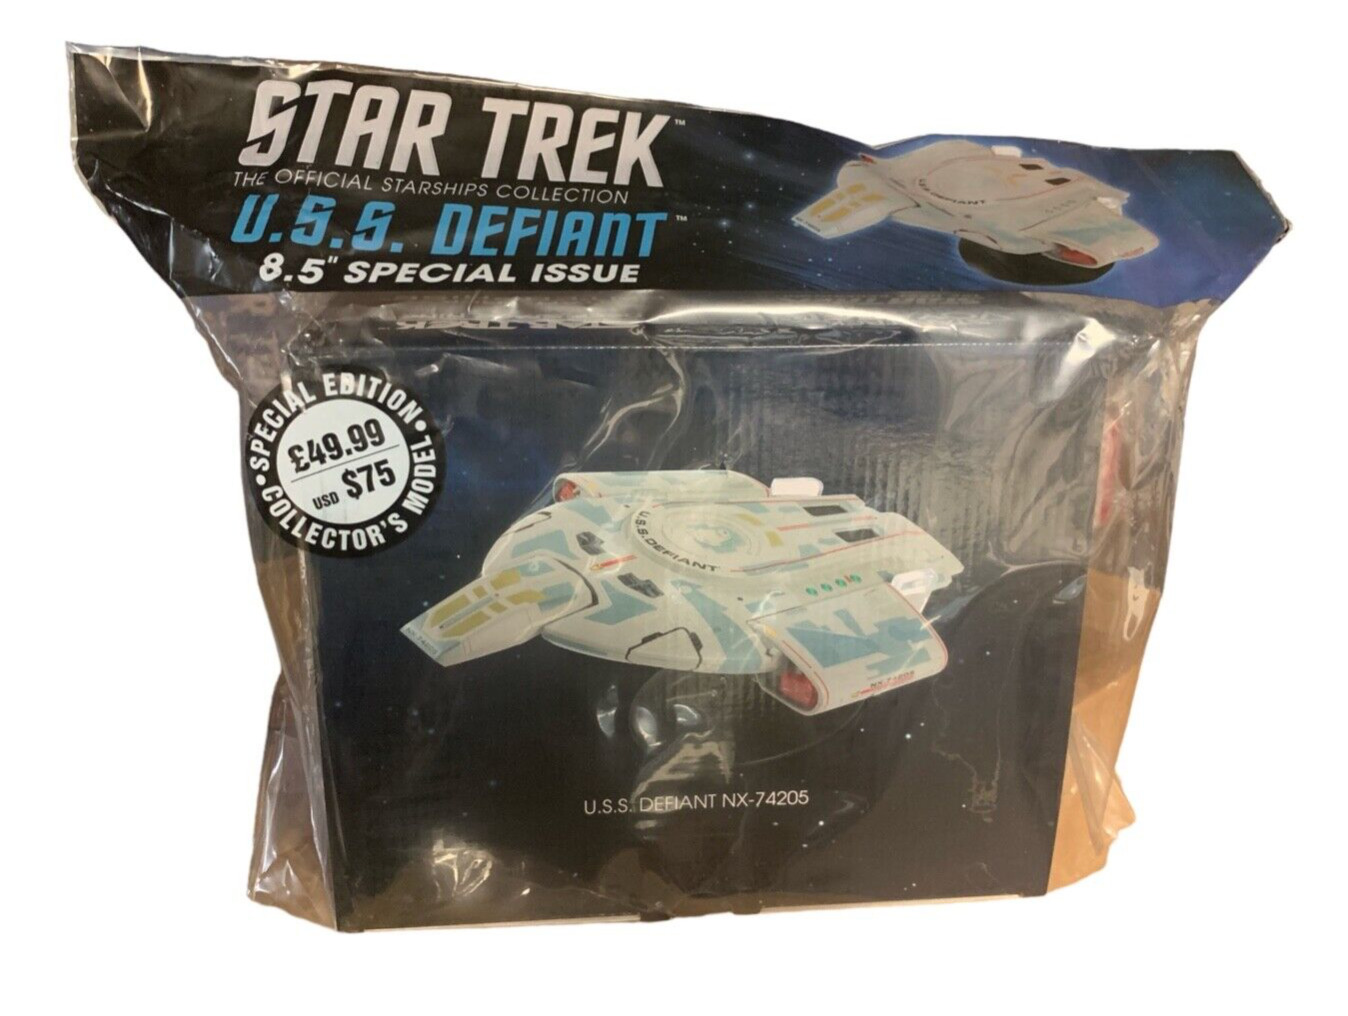 DEFIANT Star Trek Deep Space 9 Eaglemoss XL version brand new in original bag